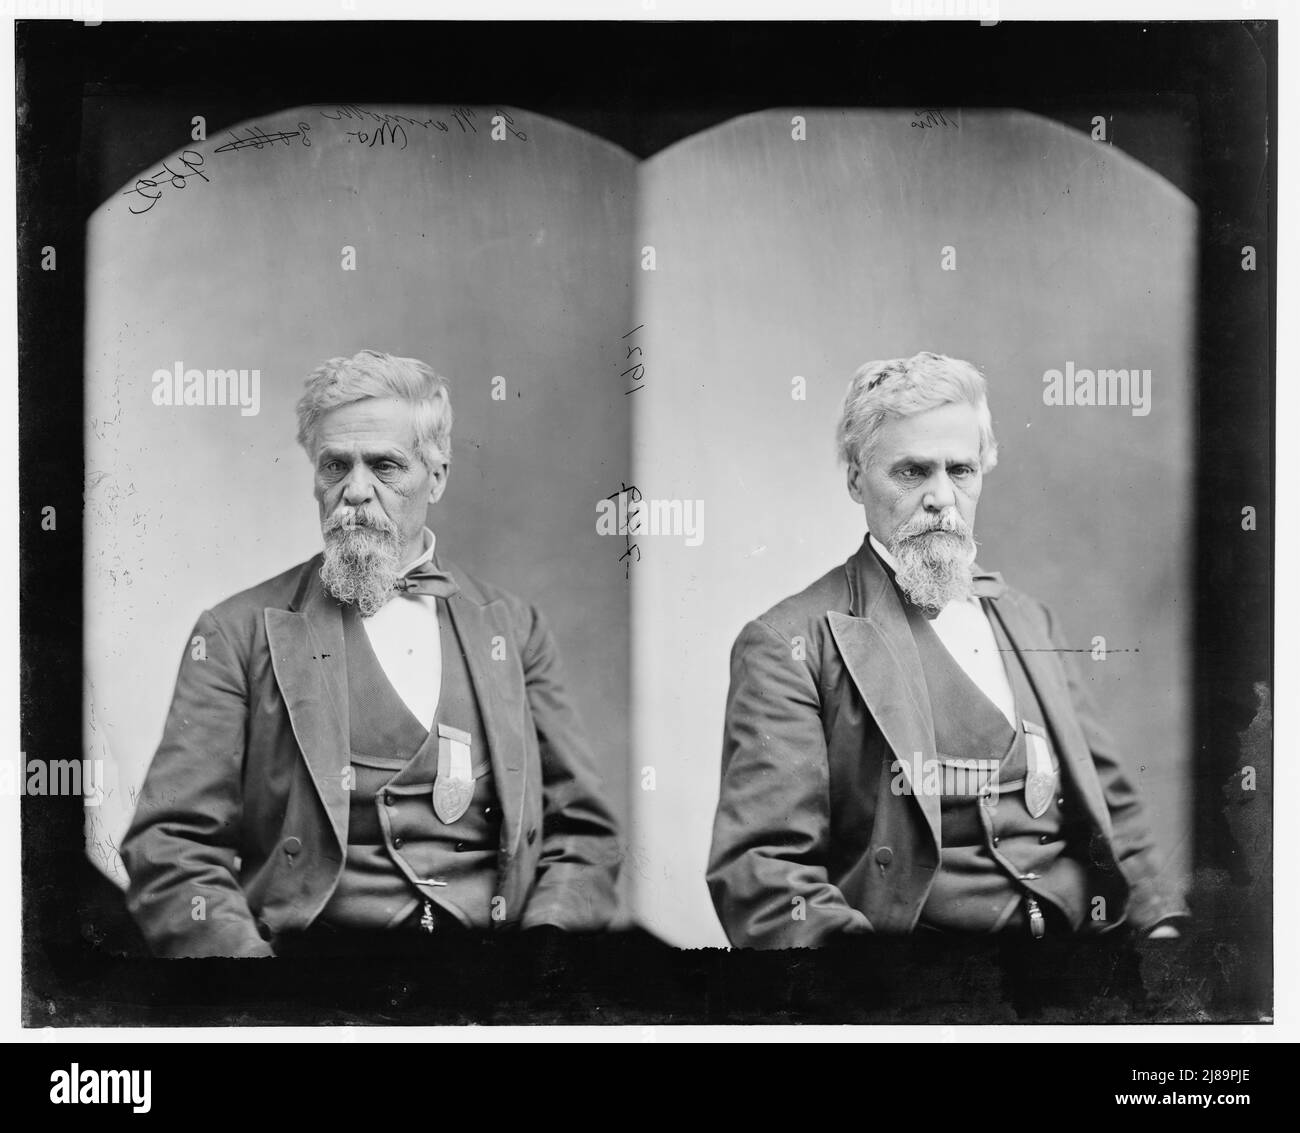 Warmoth, Hon. J. of Missouri, between 1865 and 1880. Stock Photo